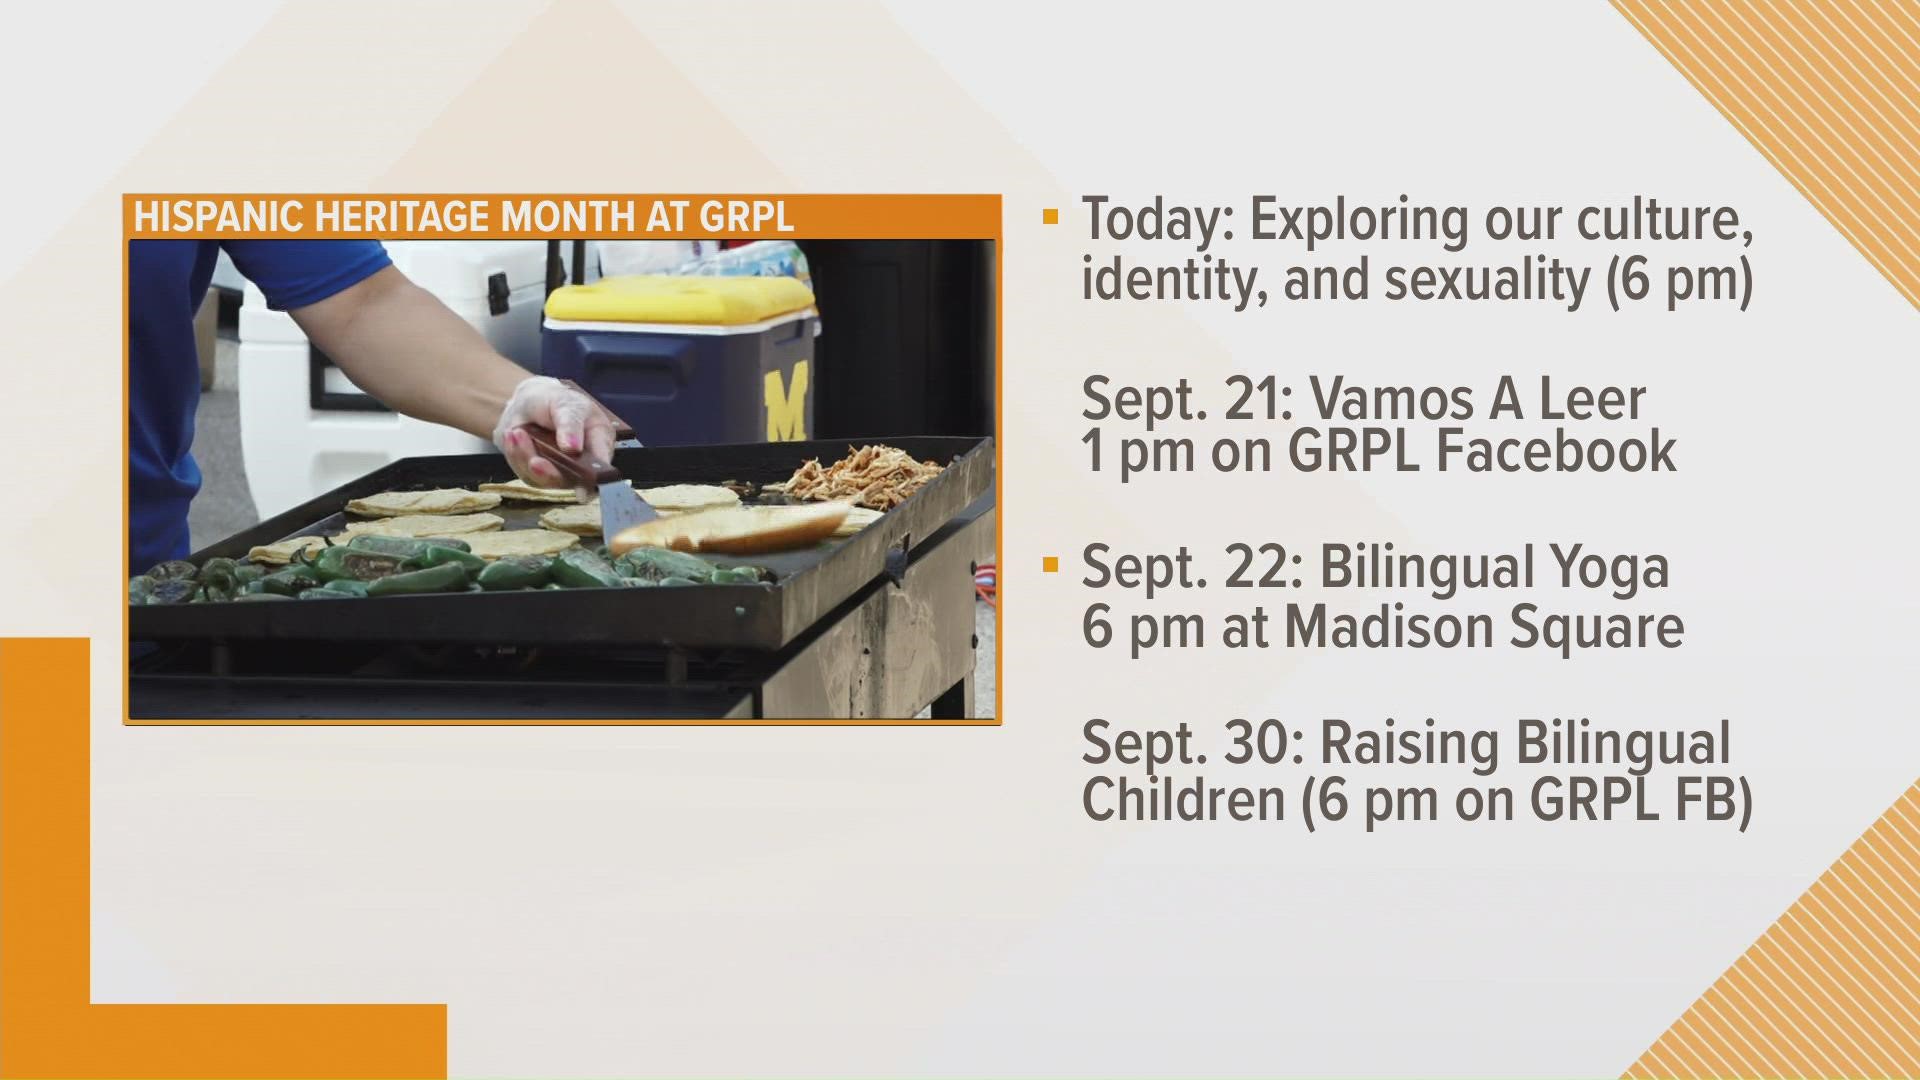 Hispanic Heritage Month is Sept. 15-Oct. 15.